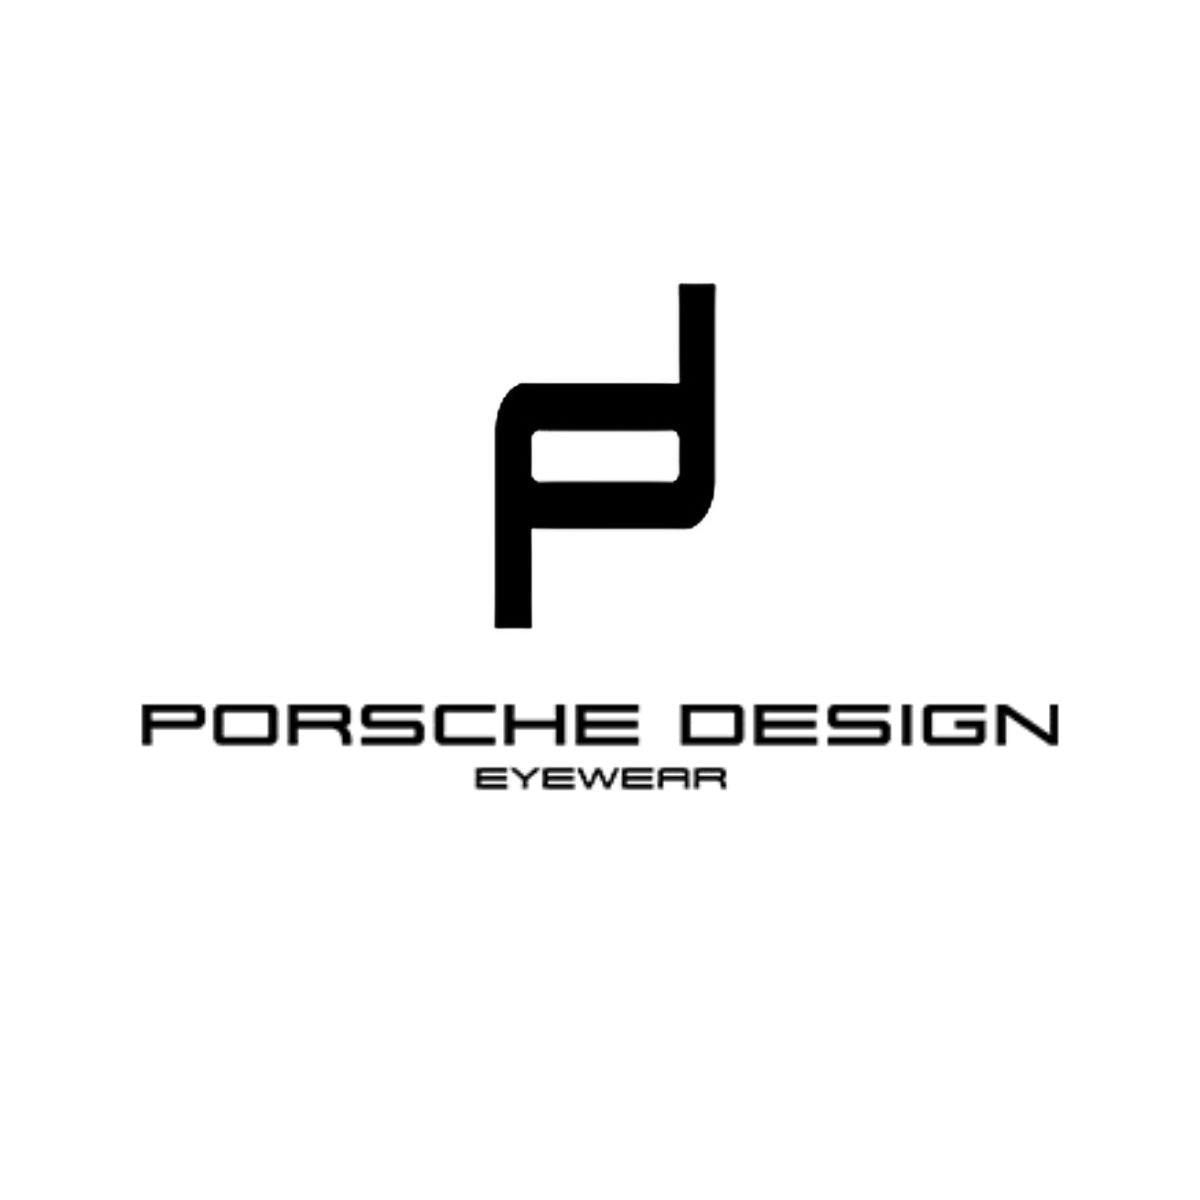 "Porsche design Premium eyewear brands sunglasses & optical frames and lenses at optorium"